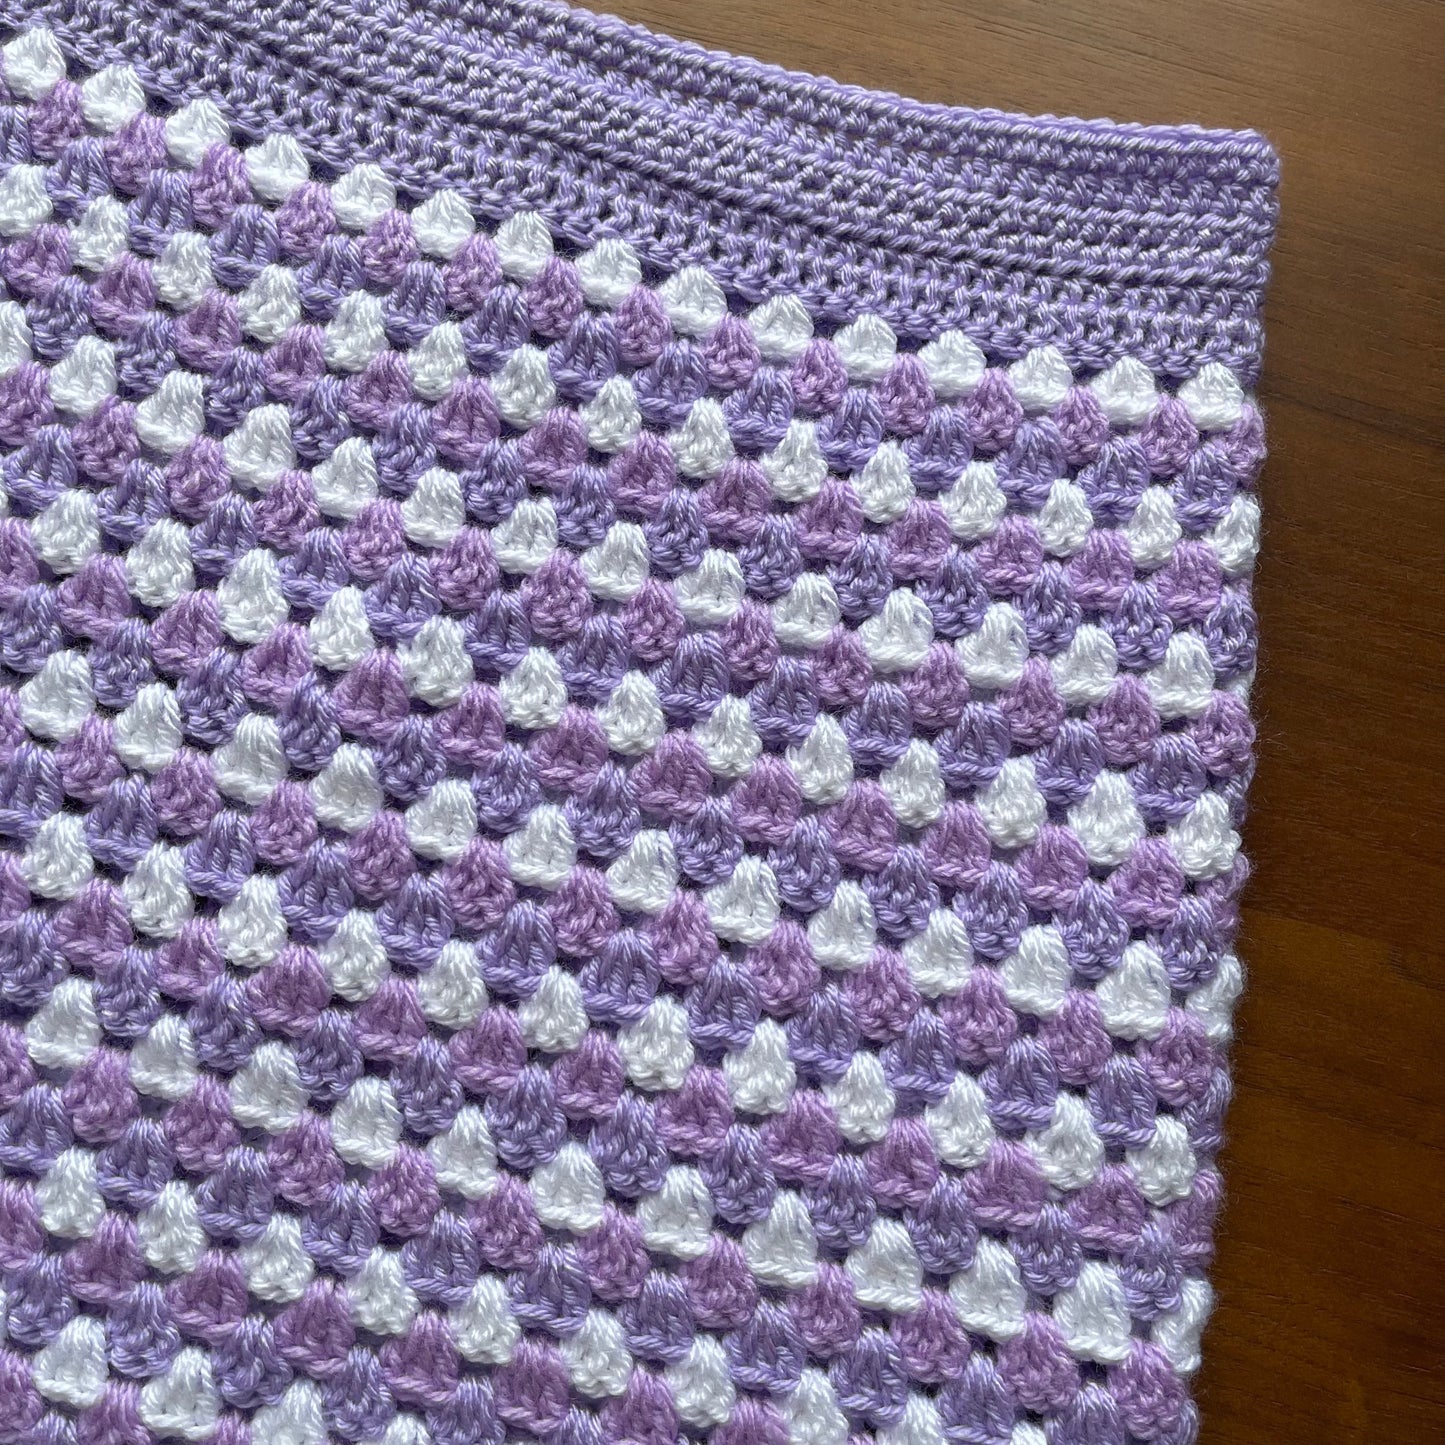 Handmade retro crochet mini skirt in lilac and white